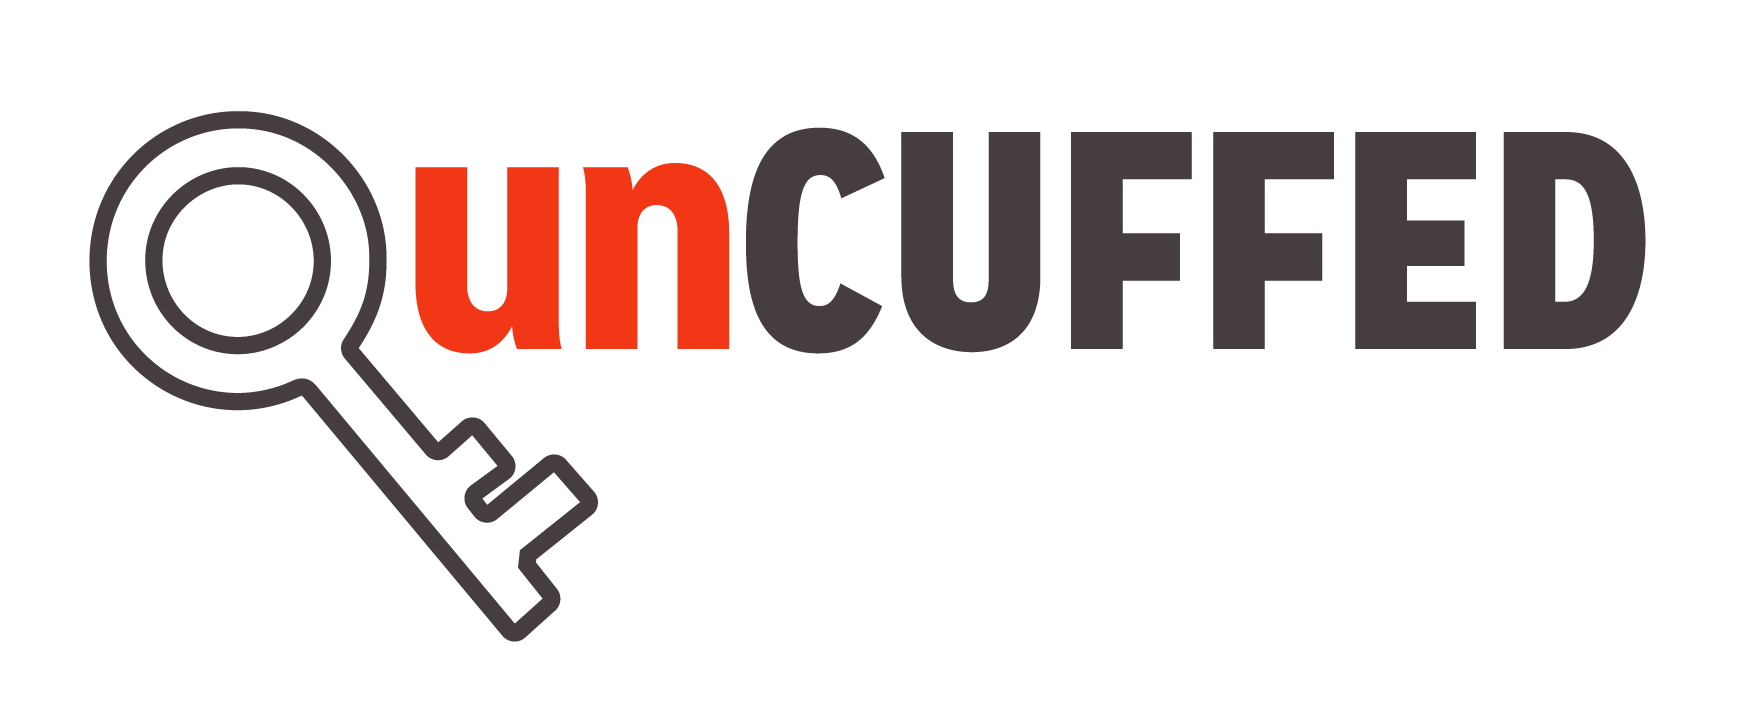 uncuffed san serif logo-01